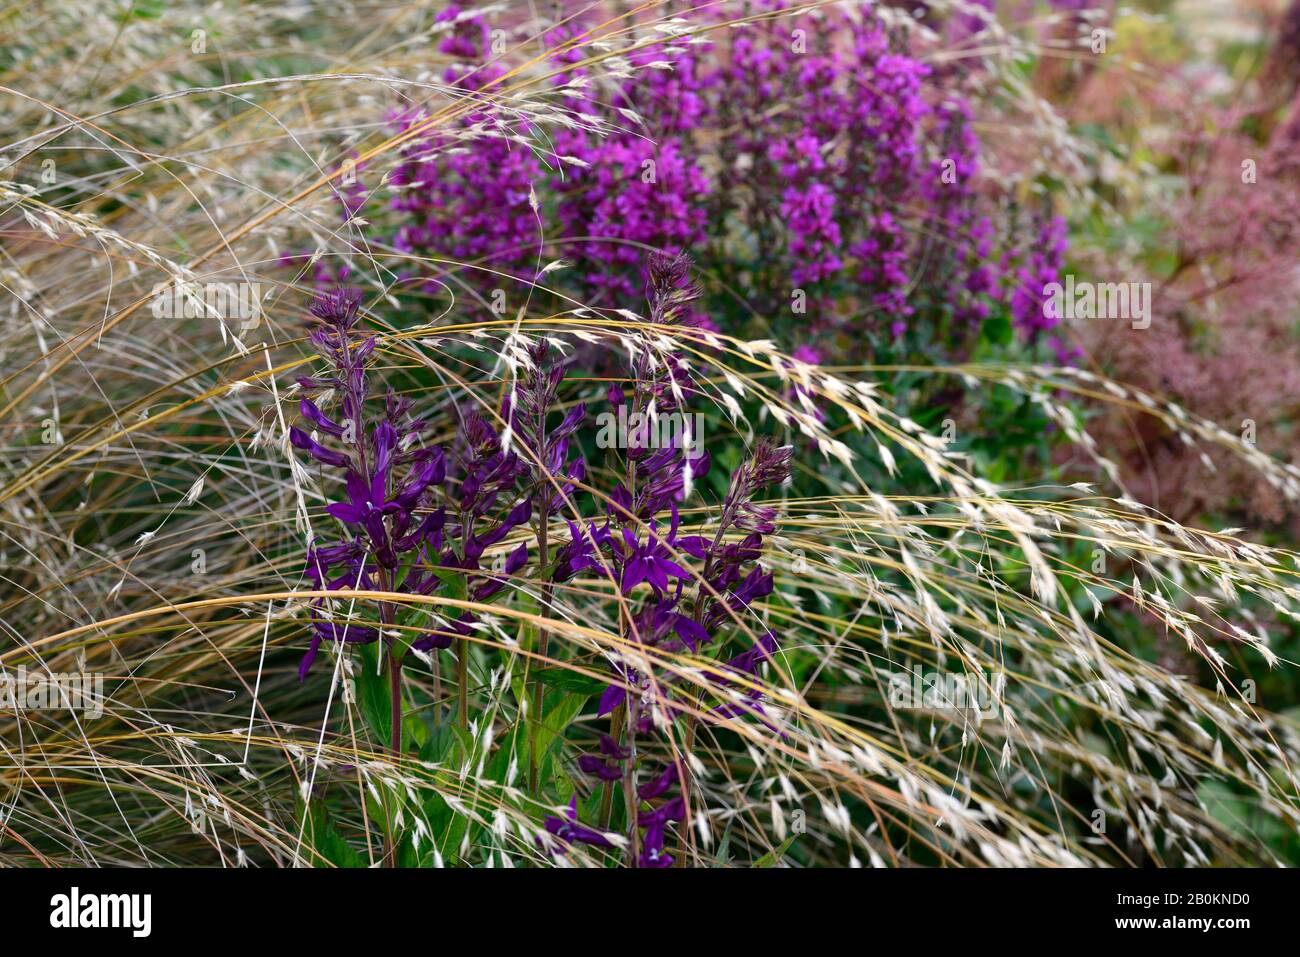 Lobelia x speciosa Hadspen Purple,Lythrum virgatum Dropmore Purple,stipa gigantea,purple flowers,flower,flowering,purple pink border,mixed border,gras Stock Photo